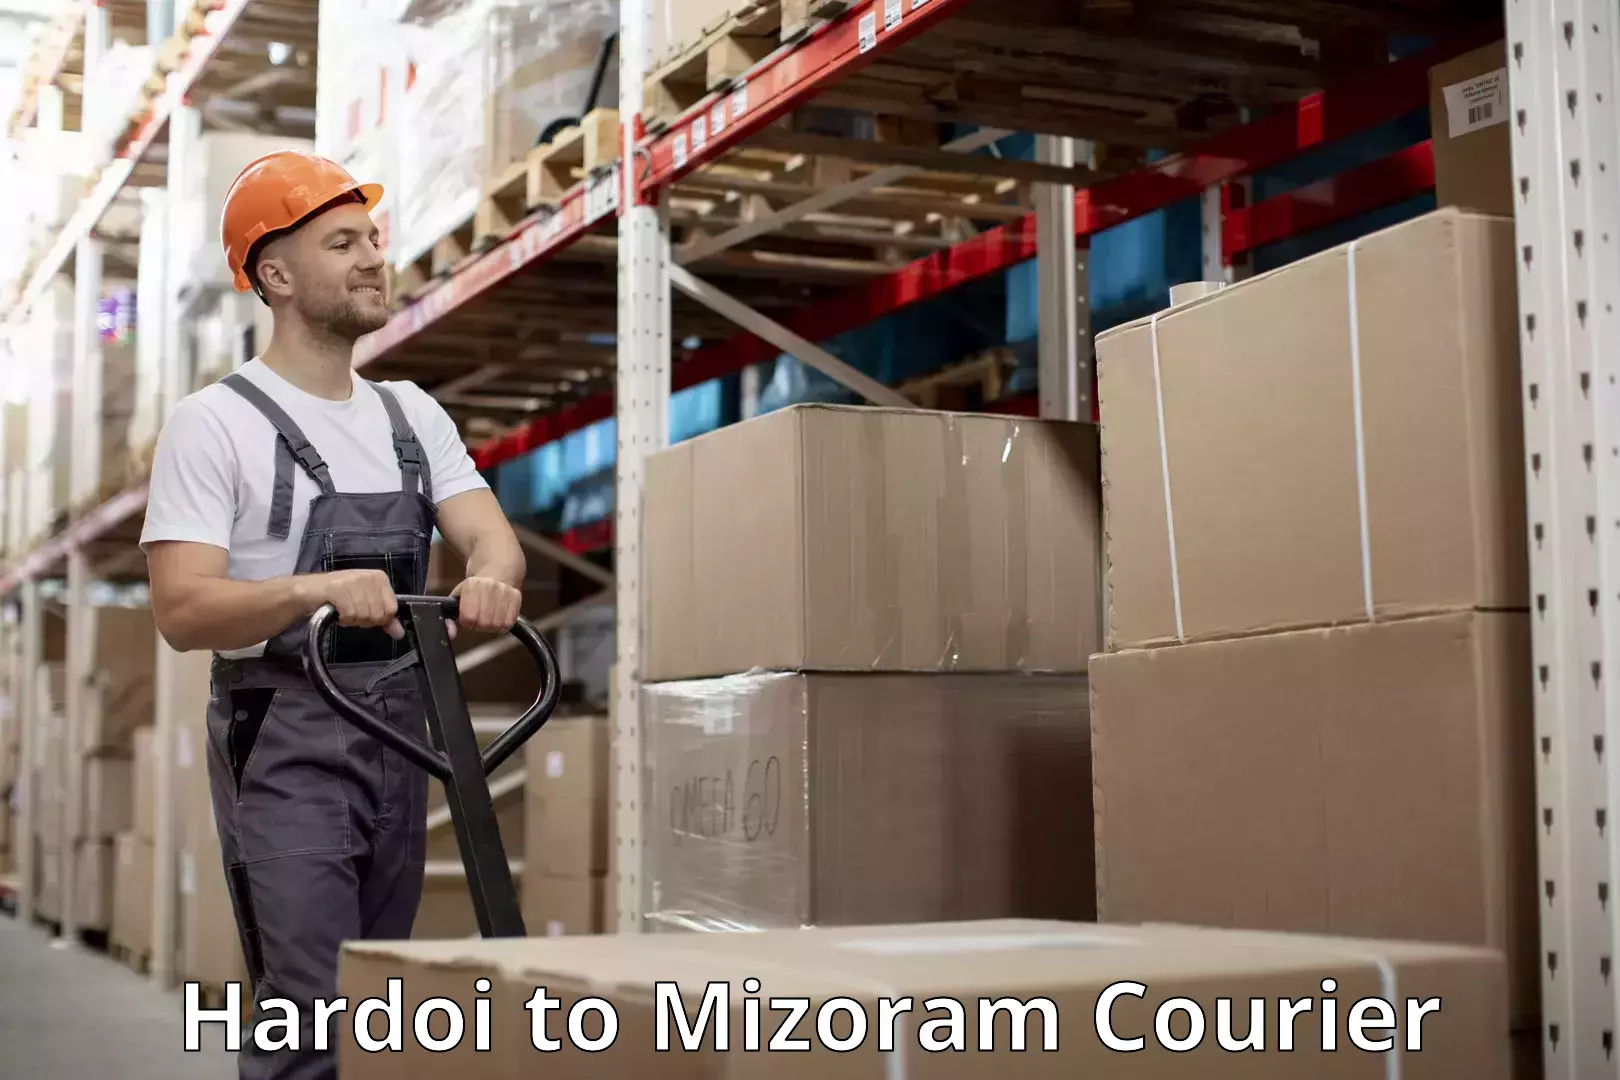 Luggage transport company Hardoi to Mizoram